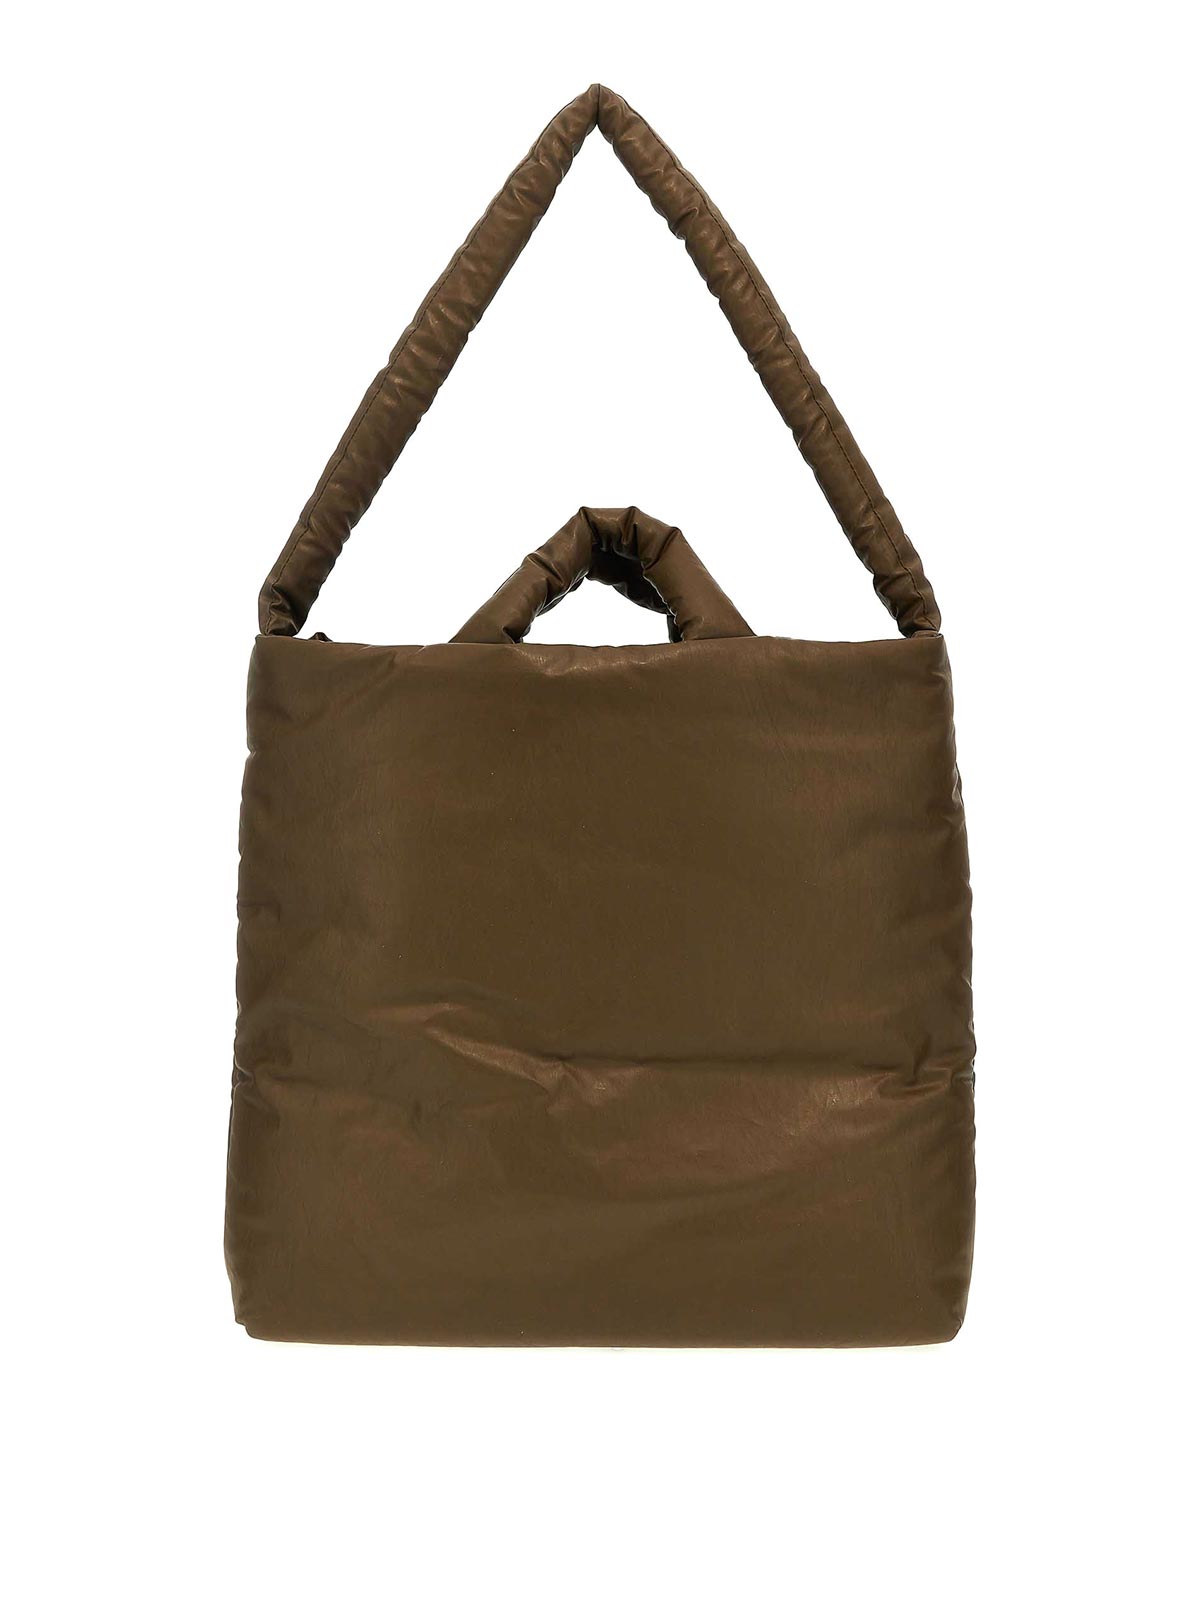 Kassl Editions Pillow Medium Shopping Bag In Brown